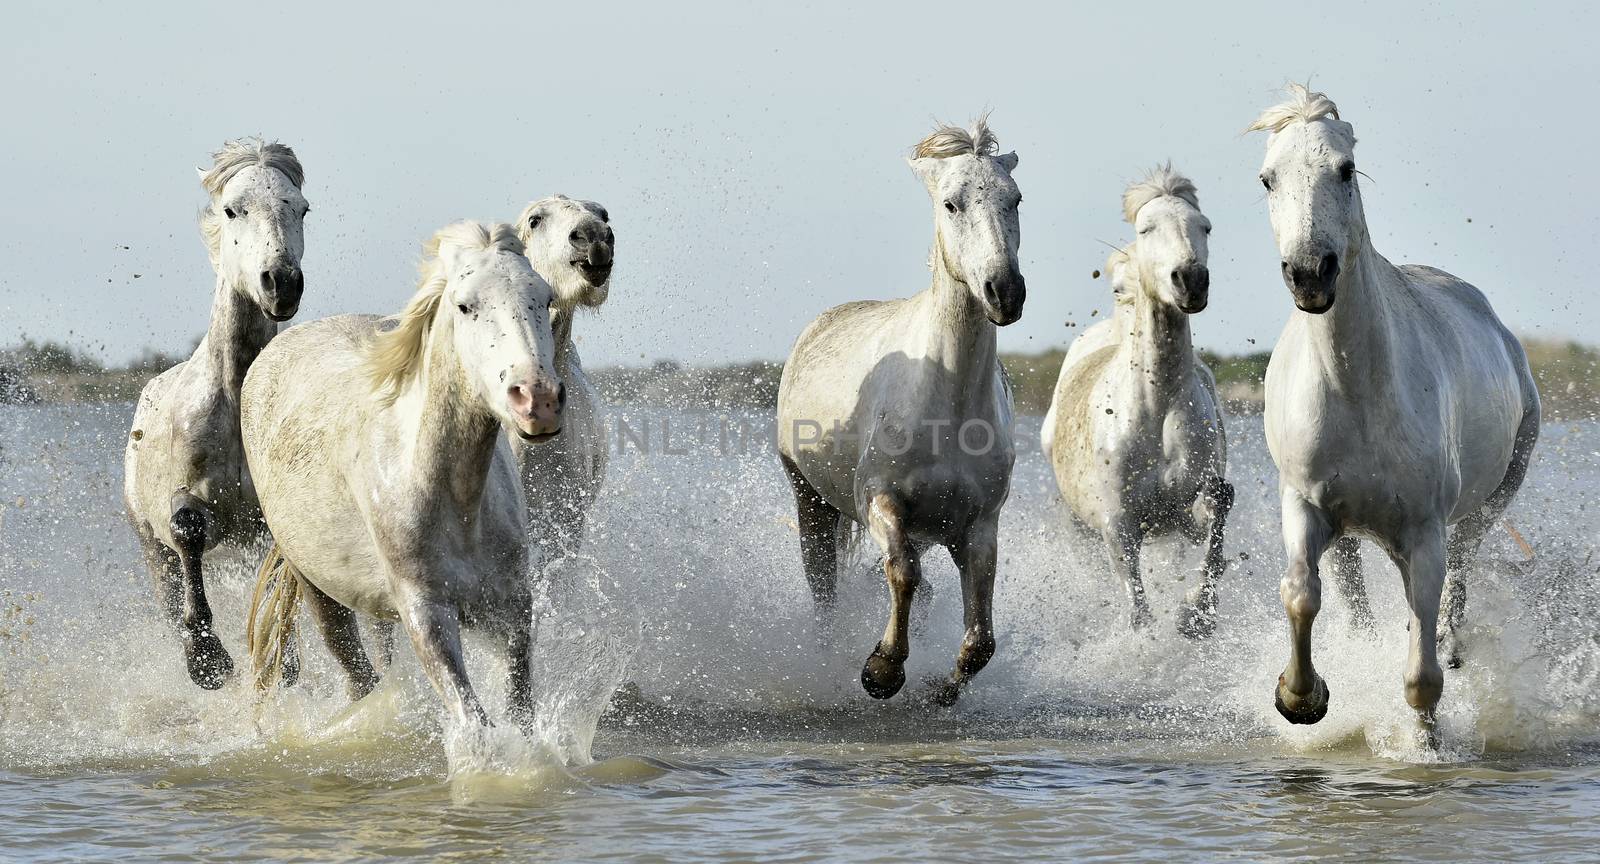 Running White horses through water by SURZ